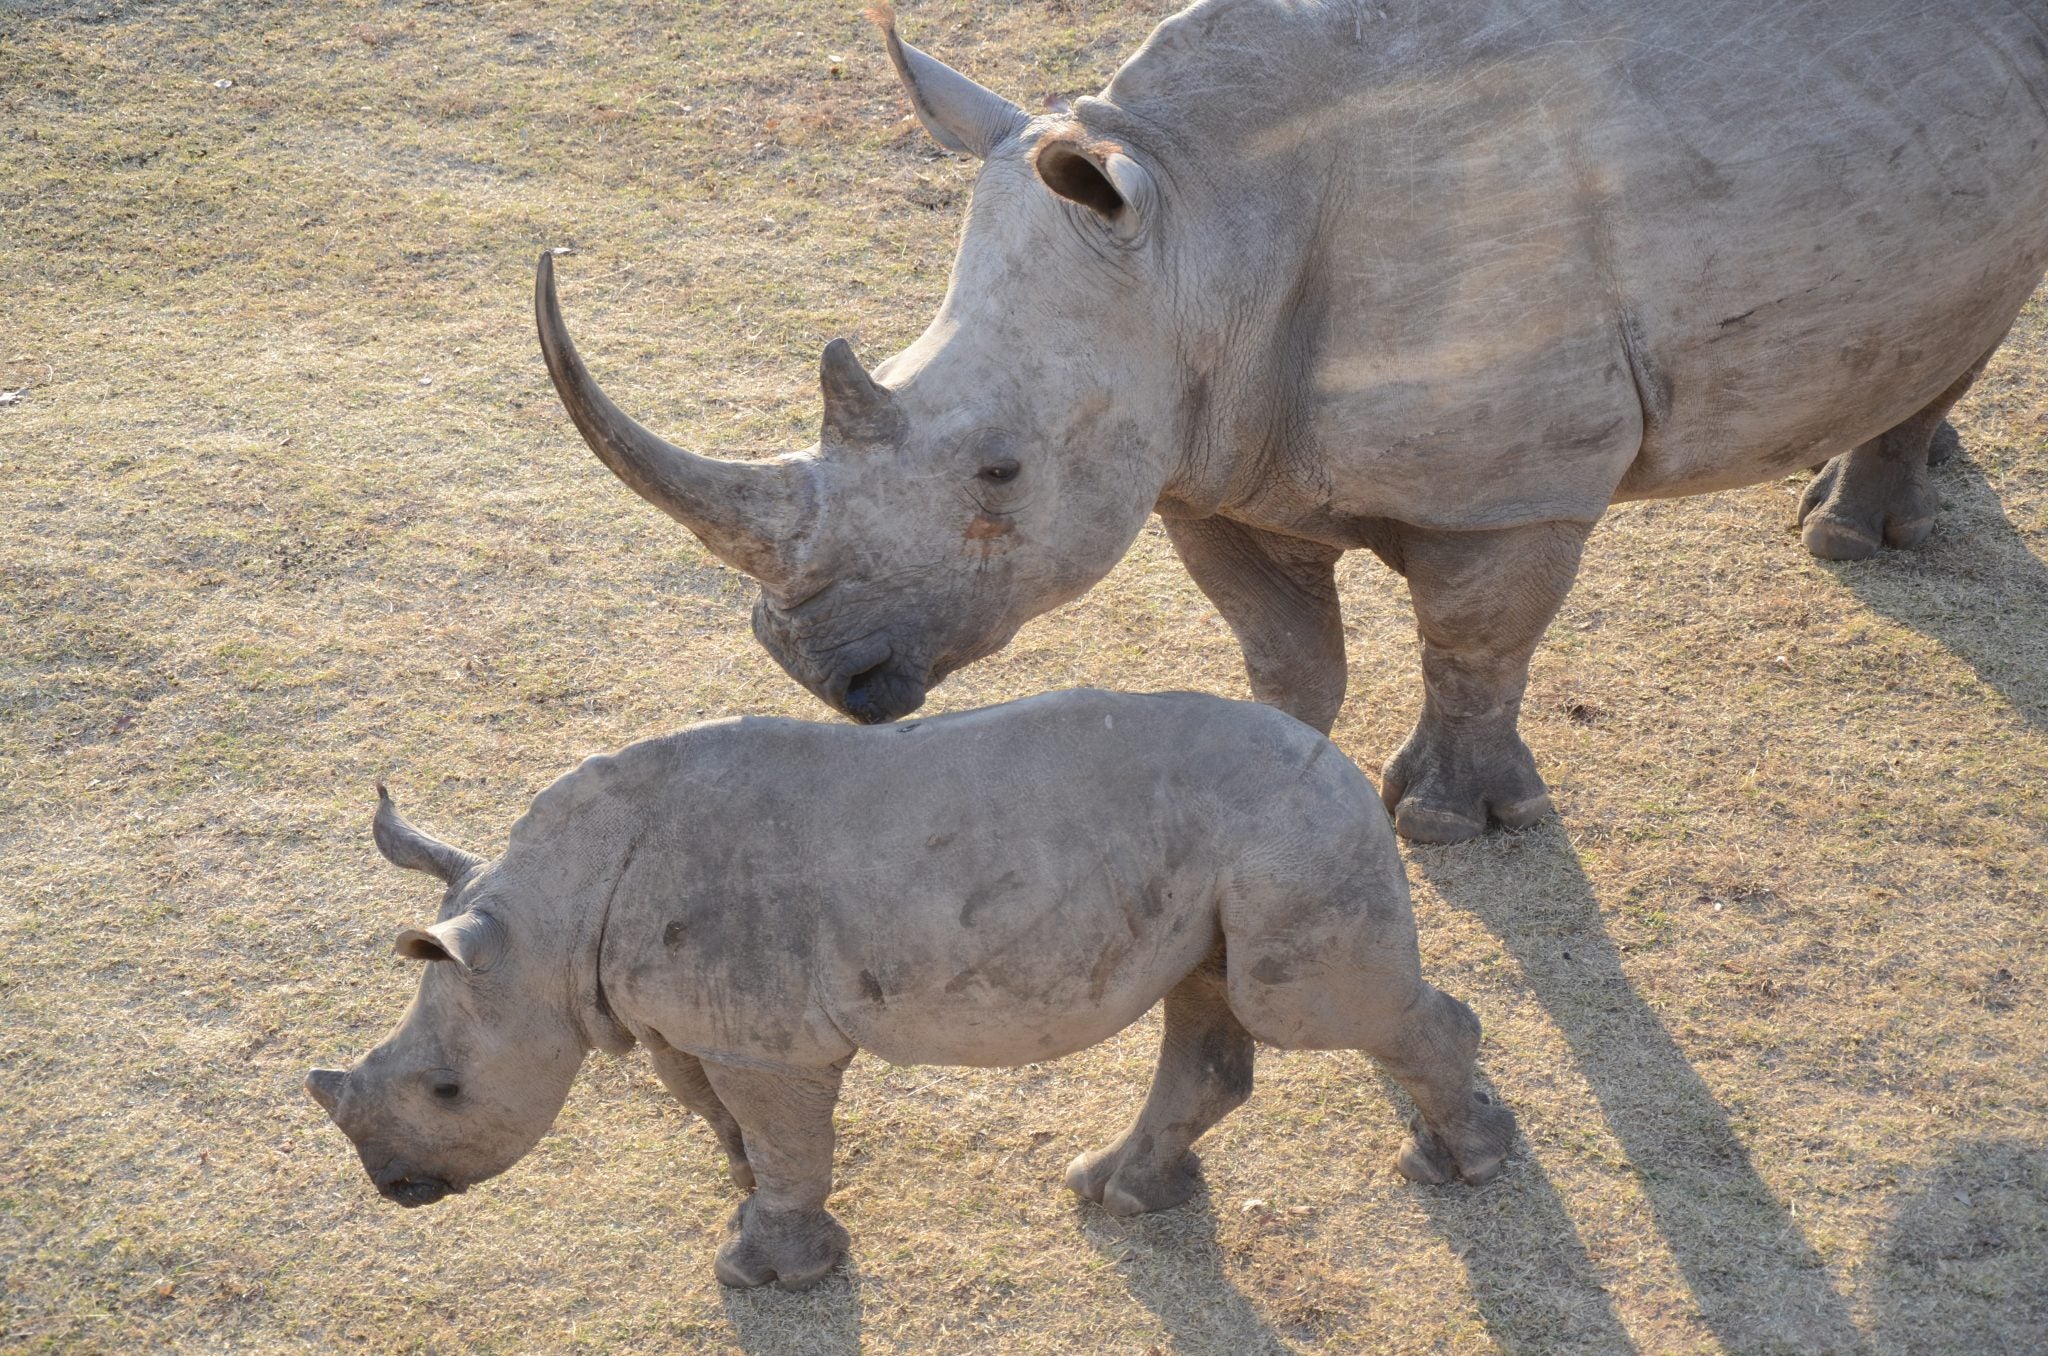 SuperBlocco spenden fir Rhino